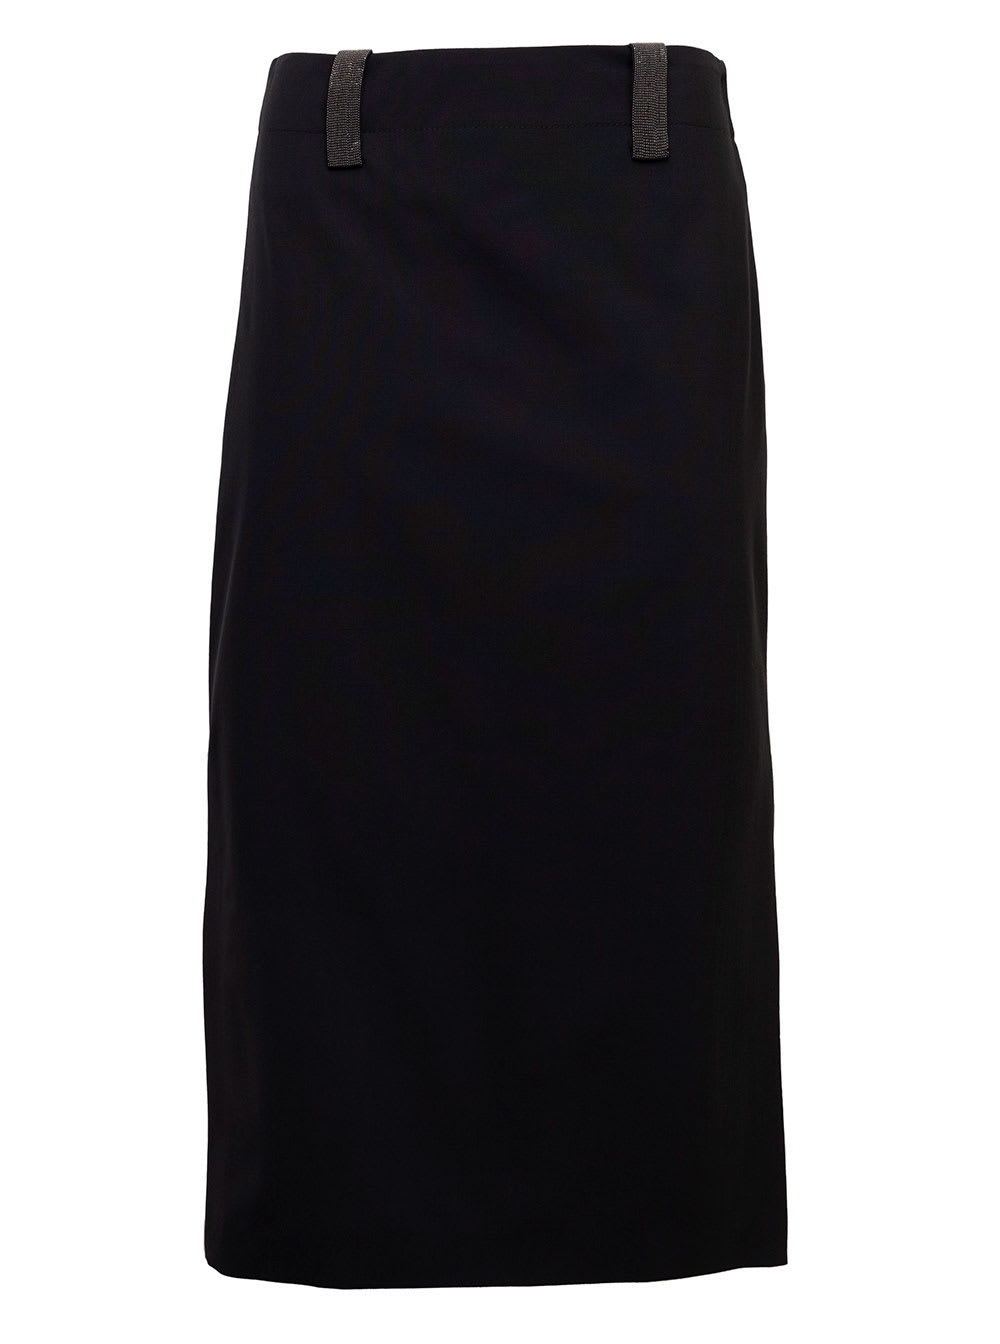 Brunello Cucinelli Womans Black Wool Pencil Skirt And Monile Details